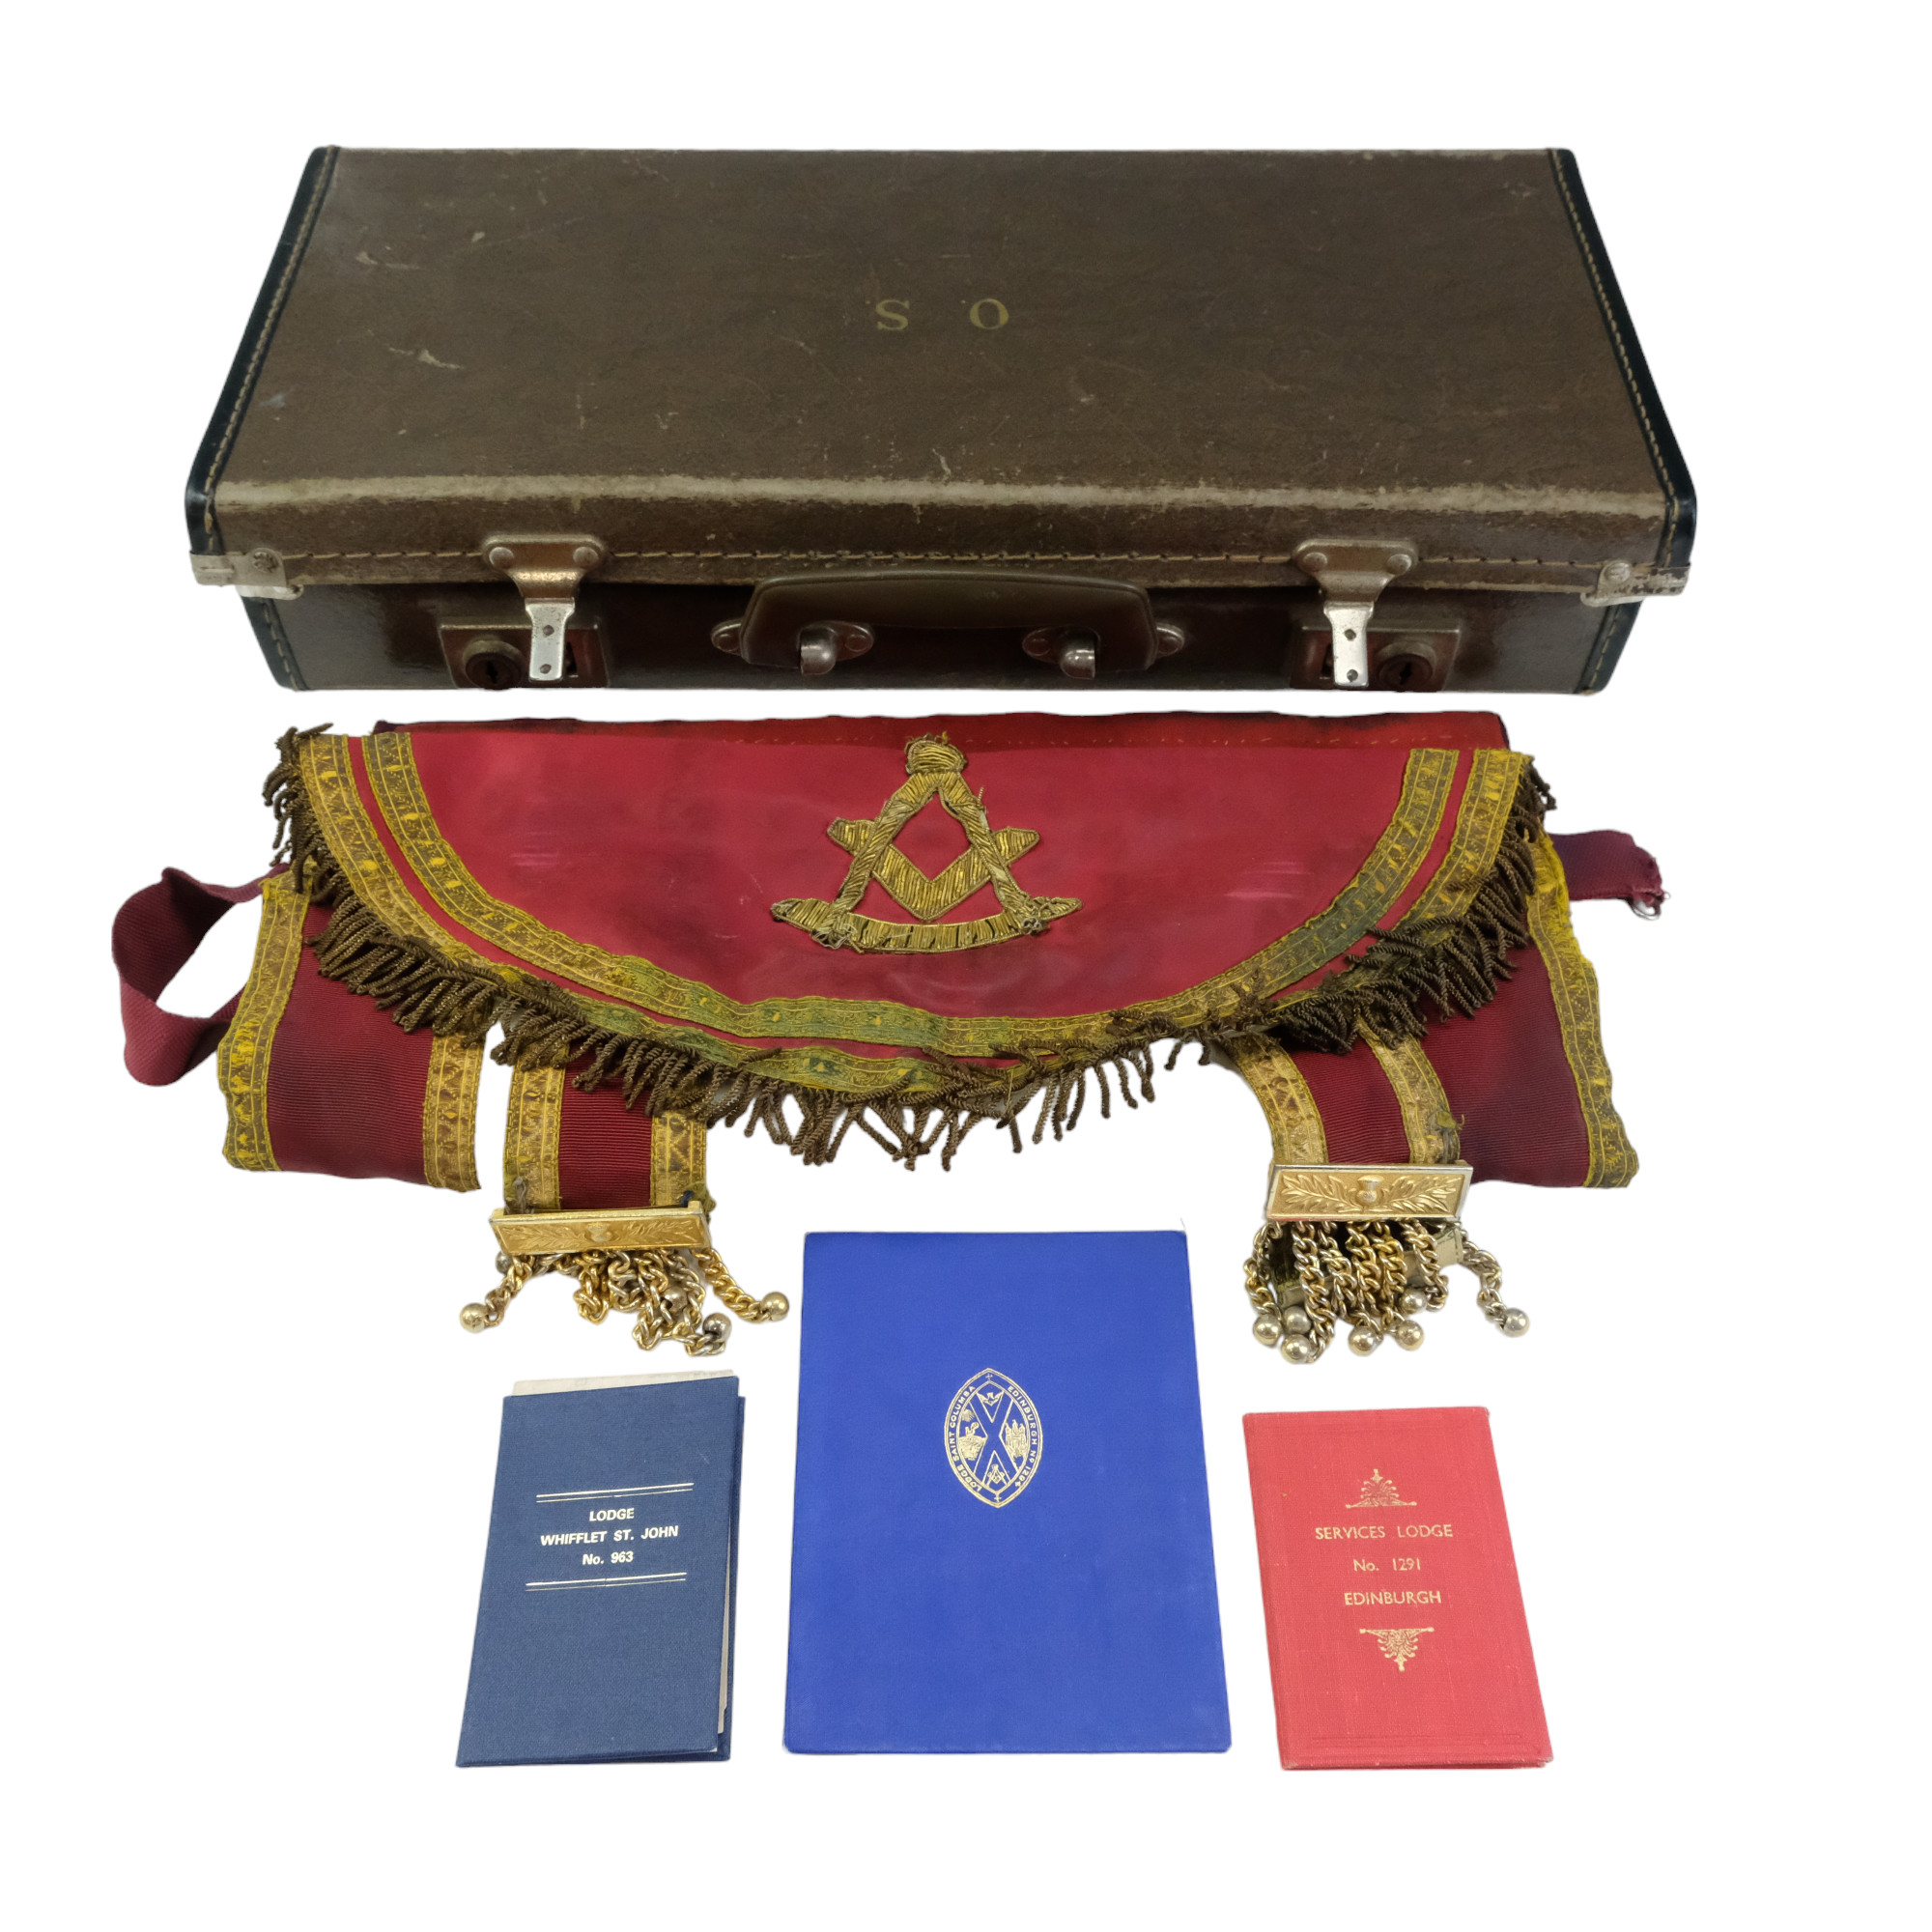 A quantity of Masonic cased regalia and ephemera